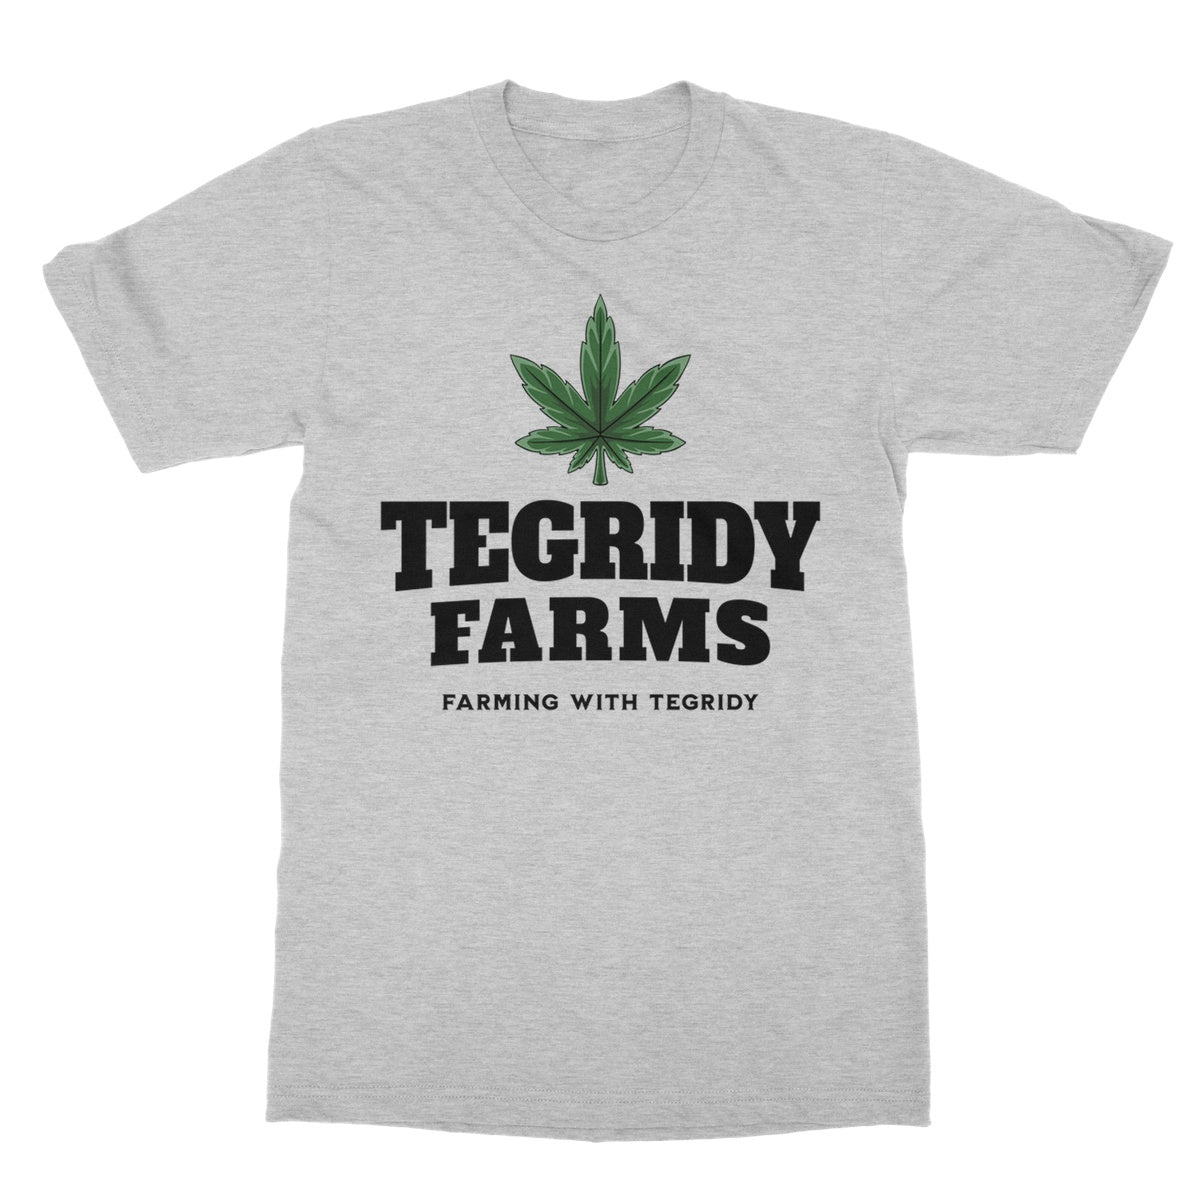 tegridy farms t shirt grey